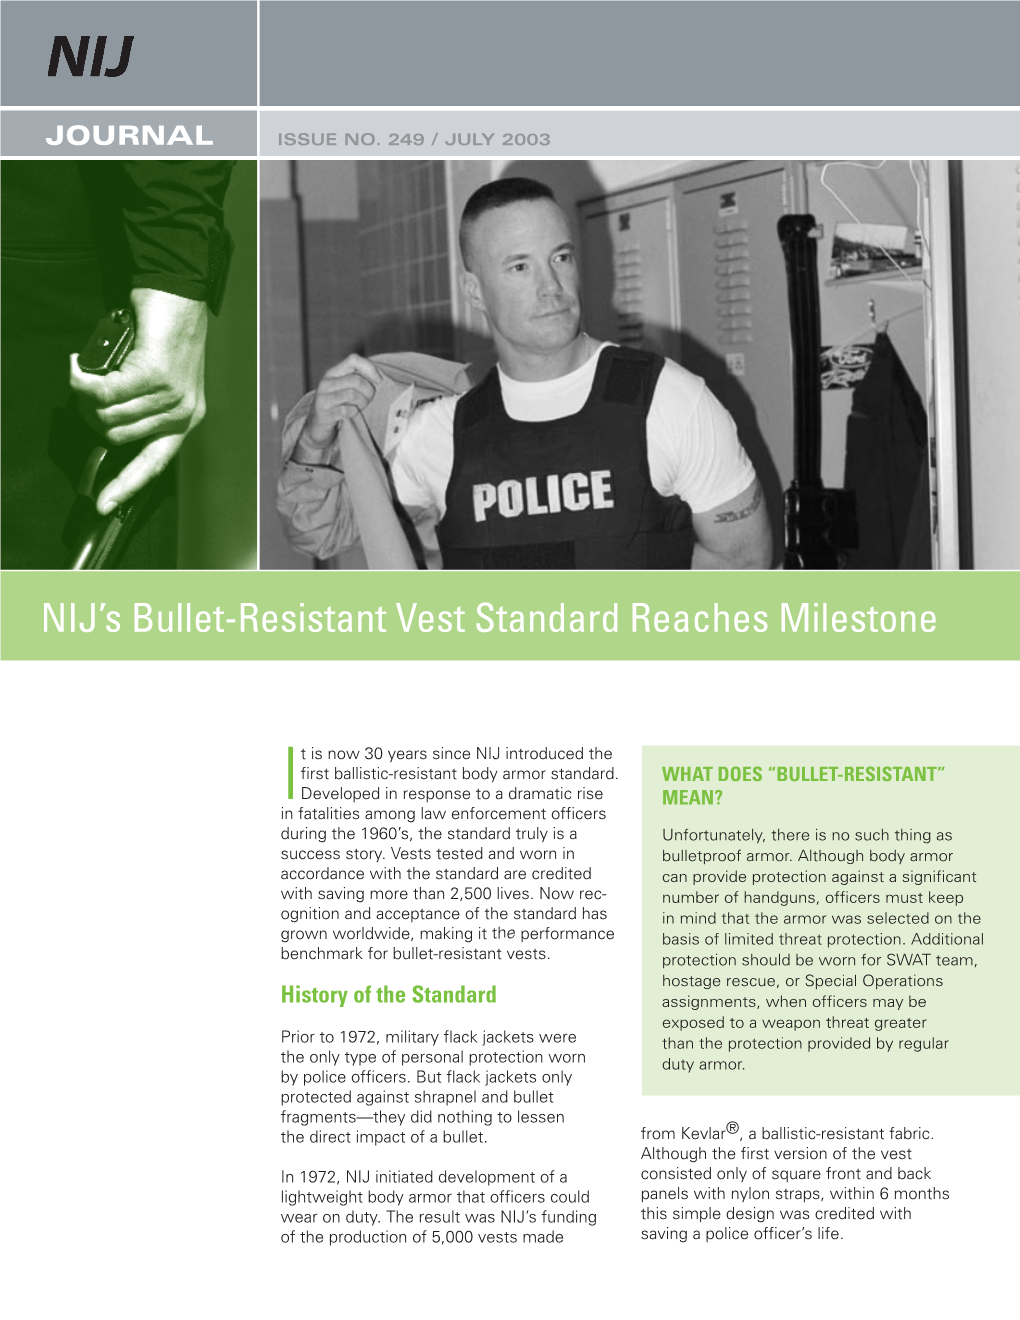 NIJ's Bullet-Resistant Vest Standard Reaches Milestone